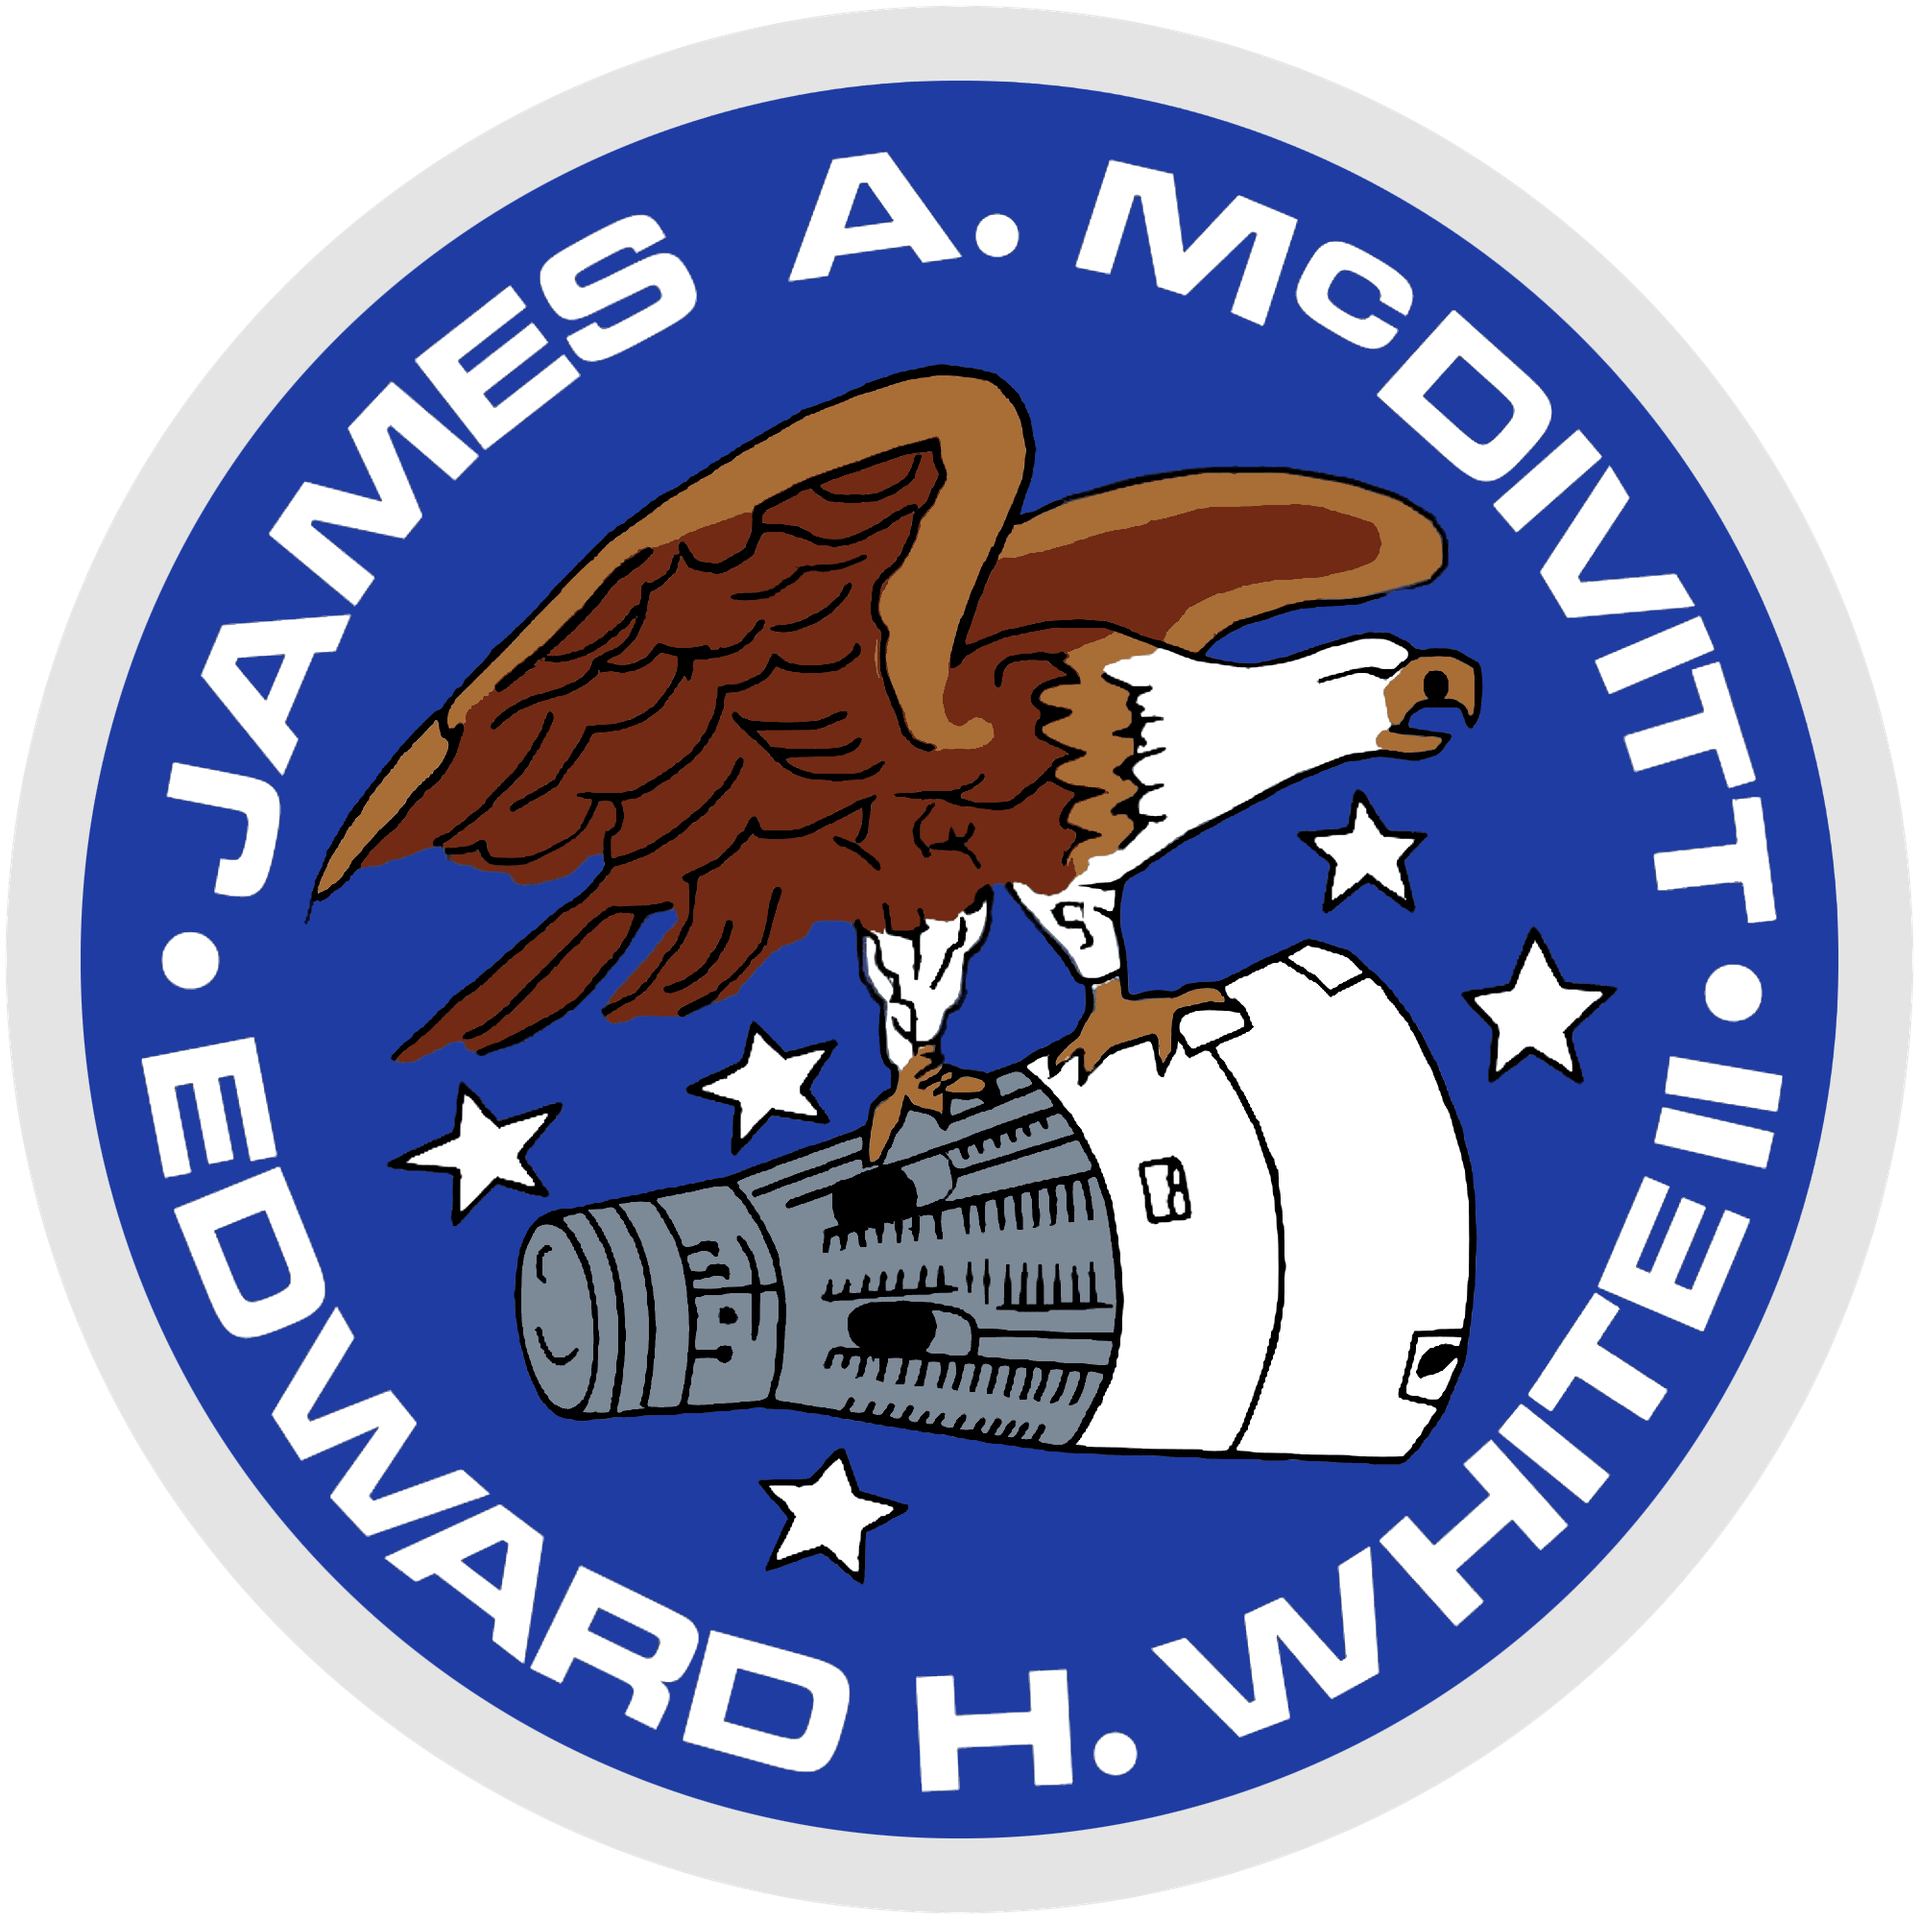 Mission patch for Gemini IV (Gemini 4)